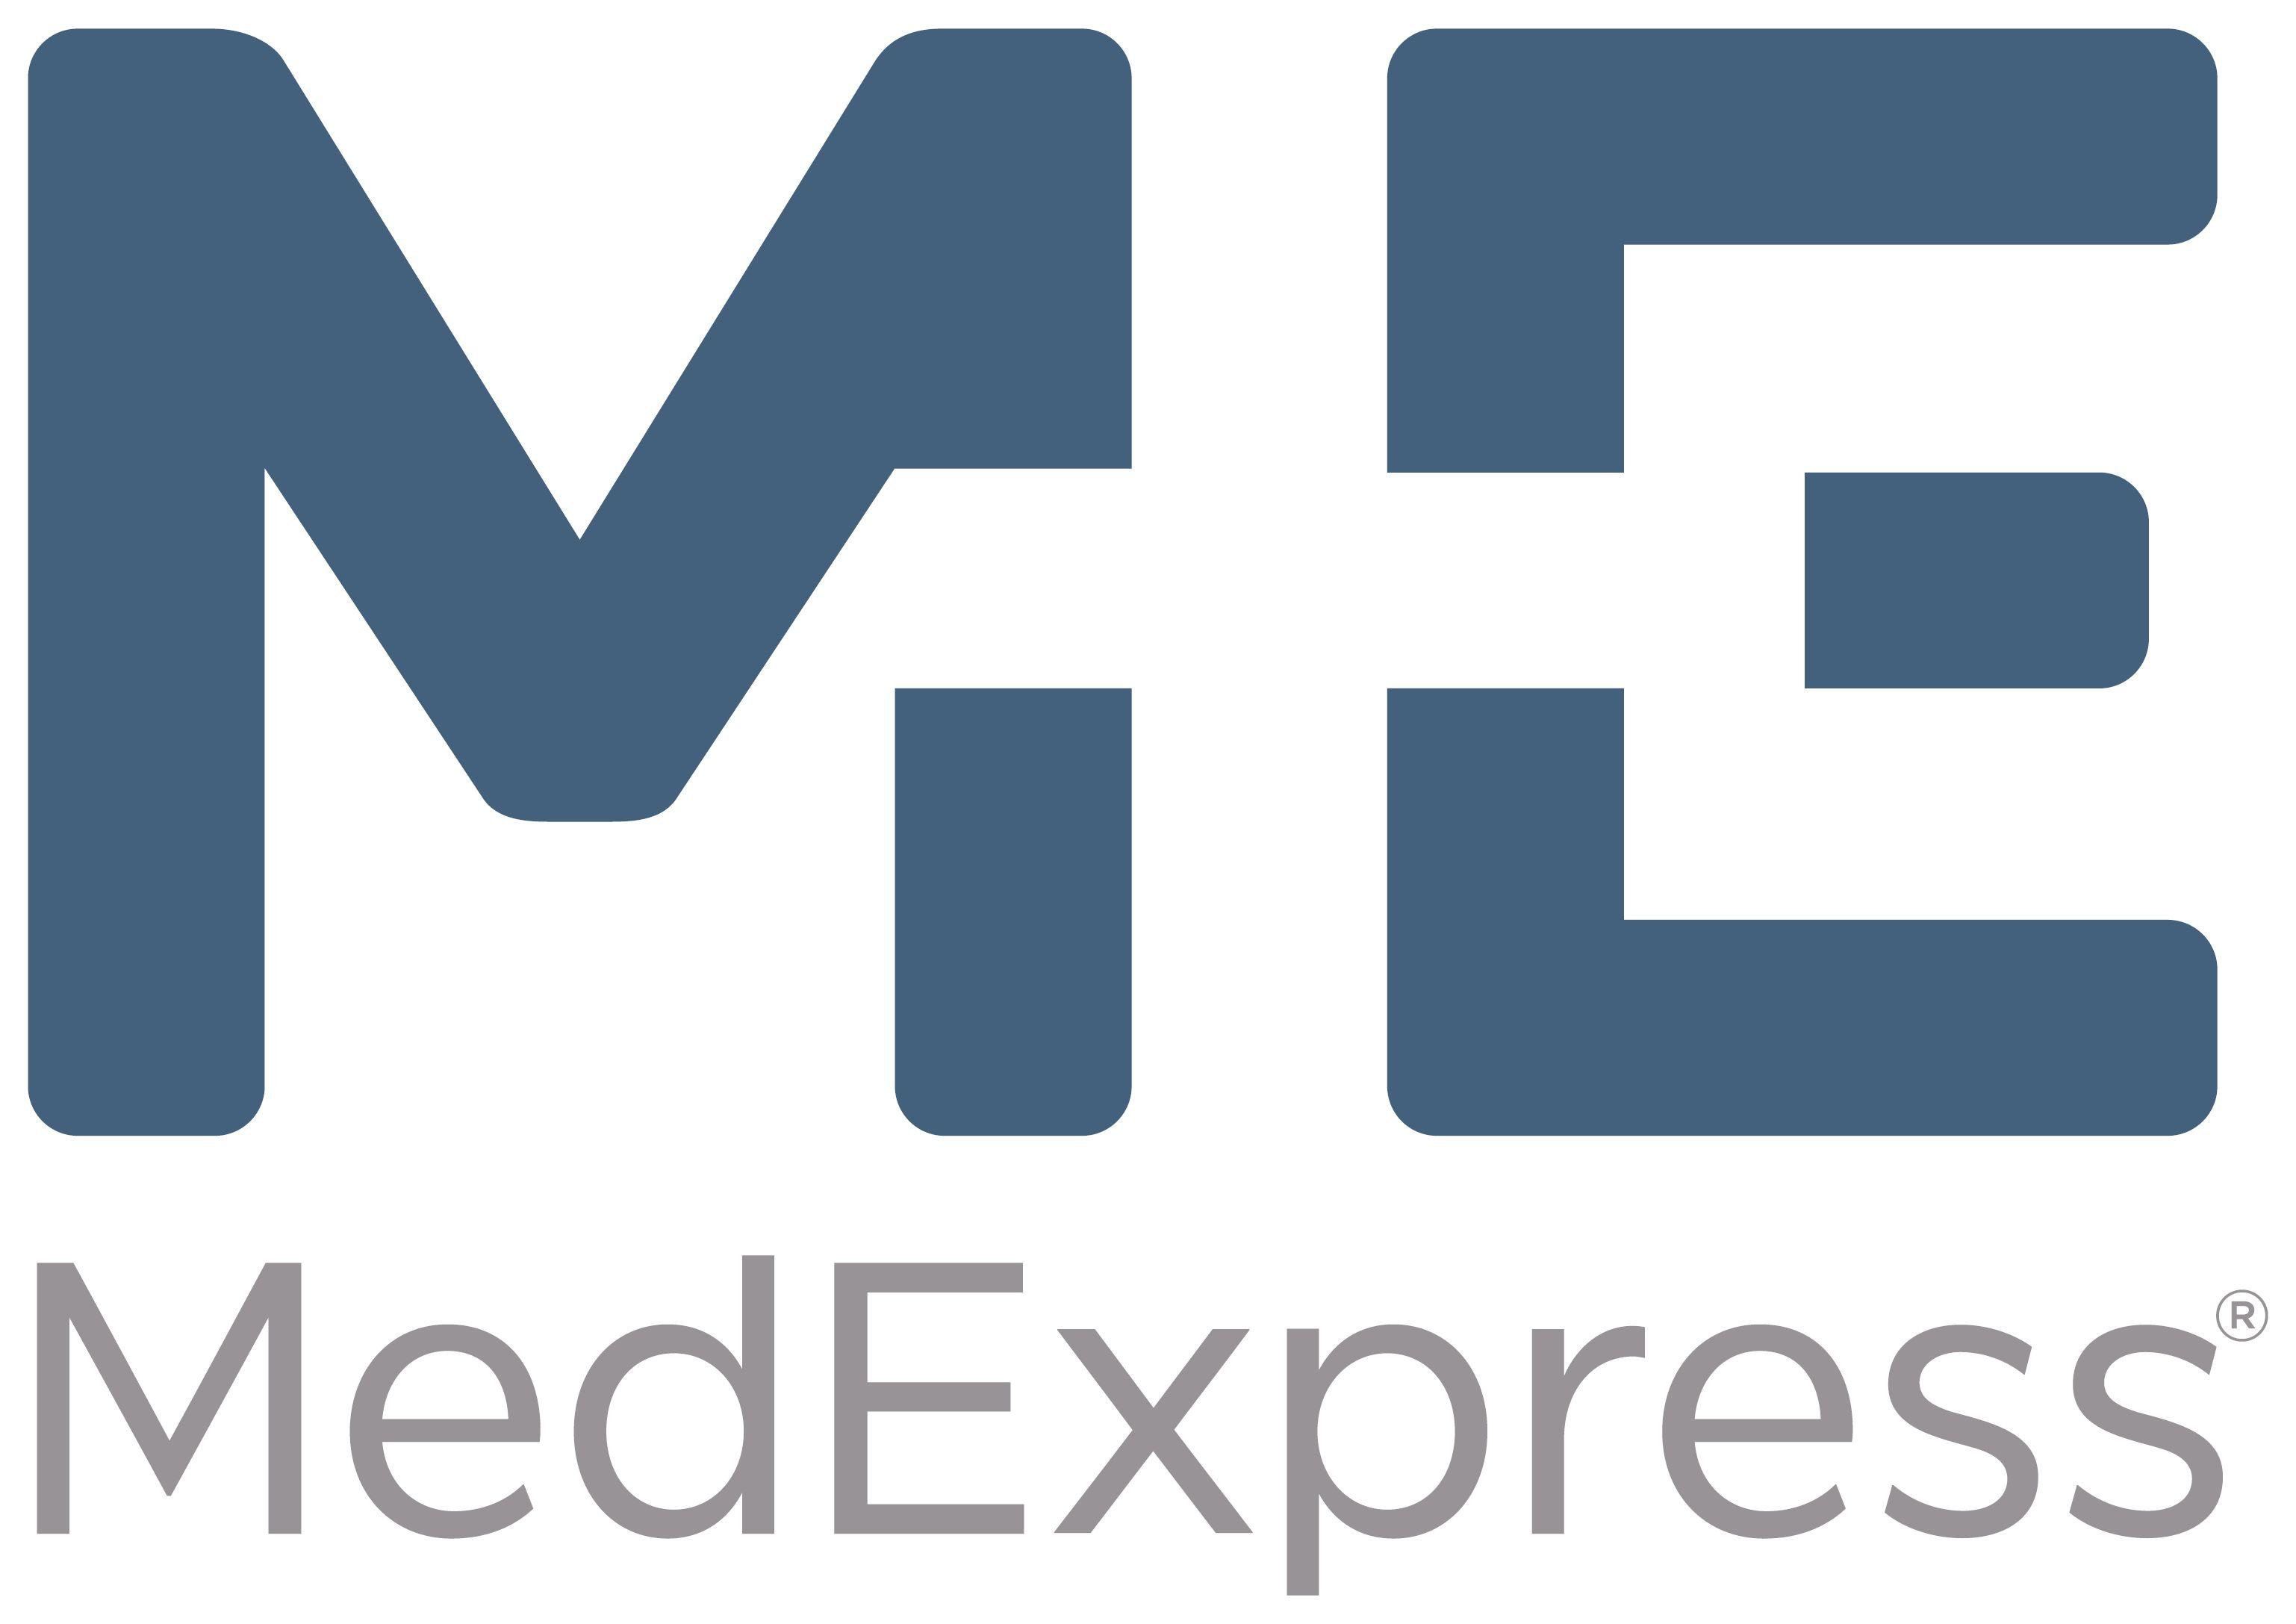 MedExpress Logo - Media Library | MedExpress Urgent Care